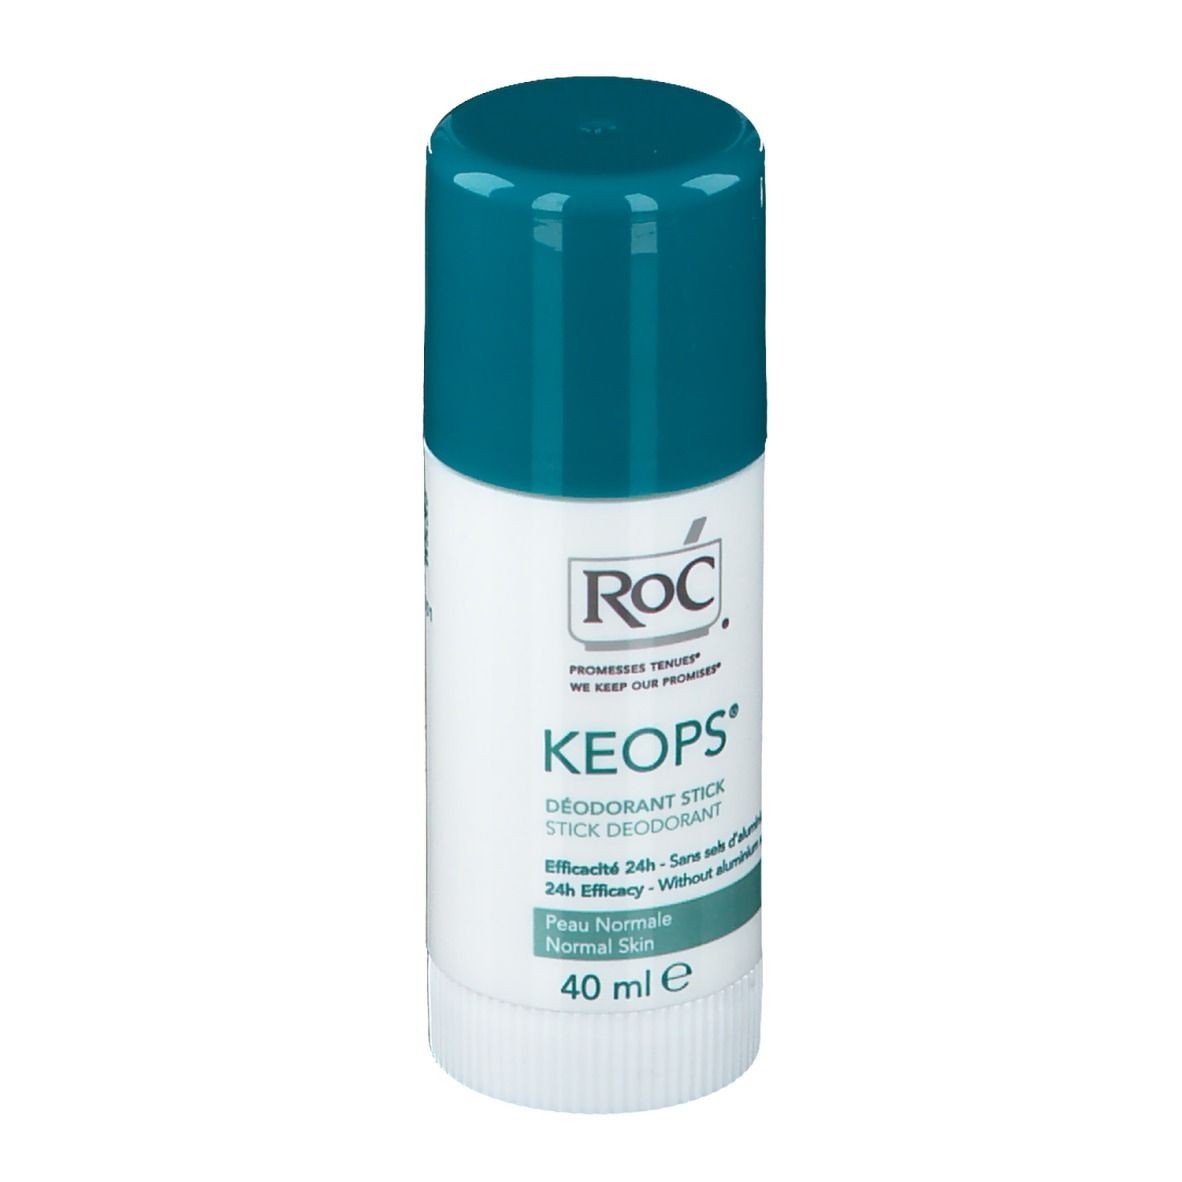 RoC Keops Deodorant Stick